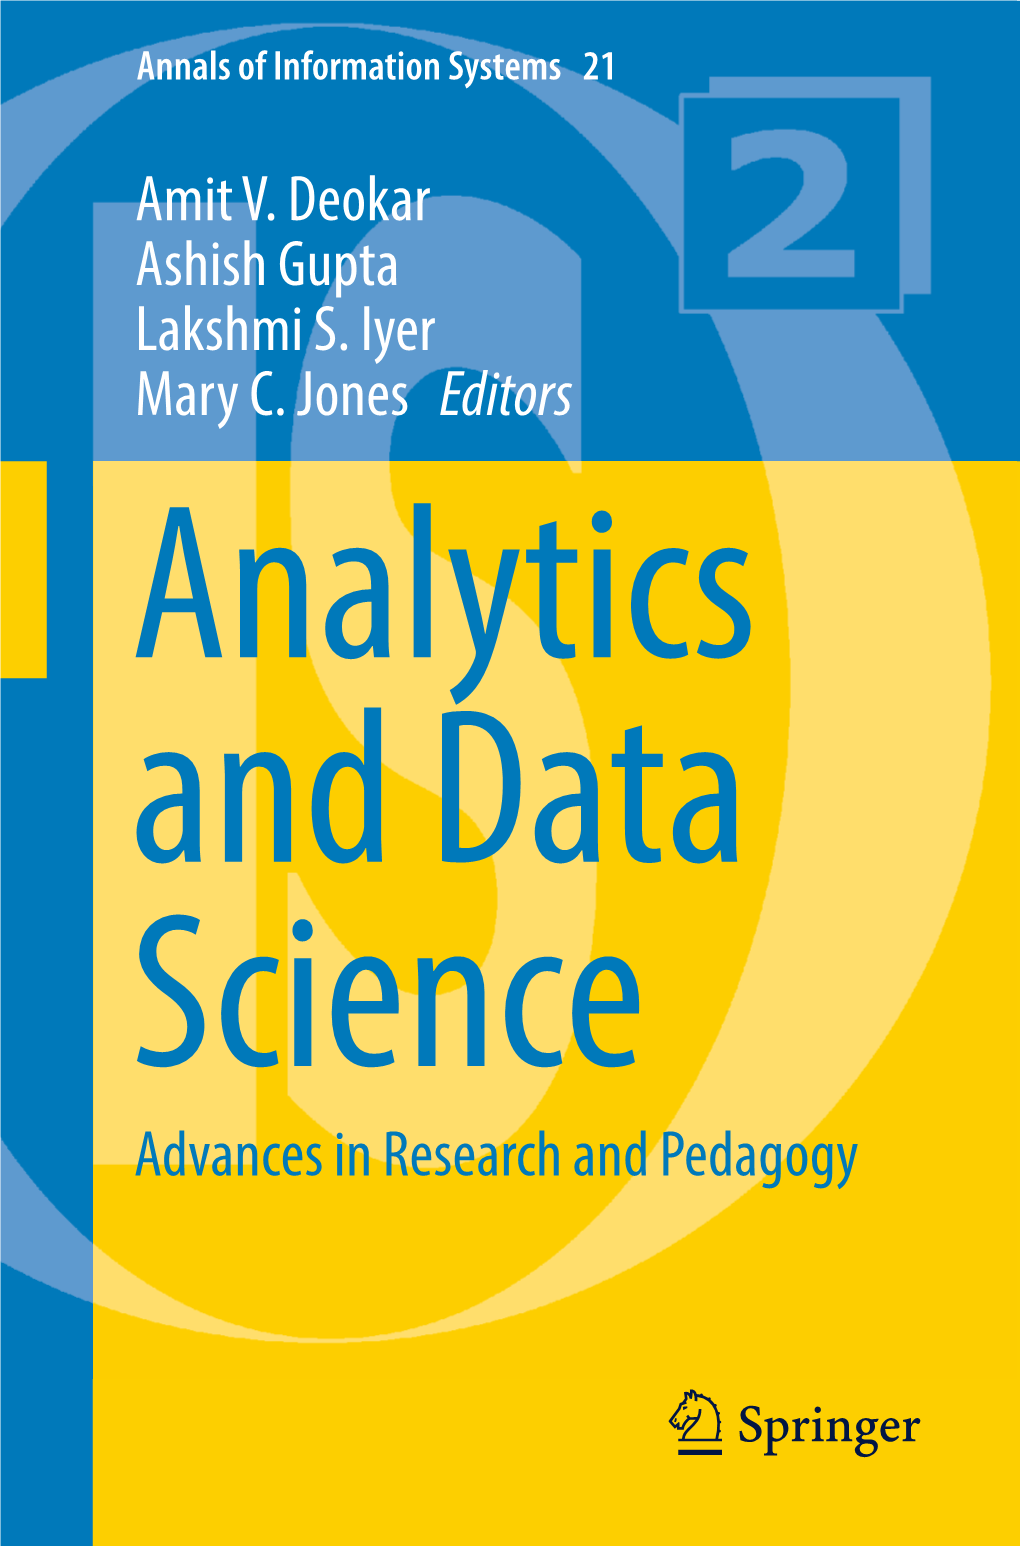 Amit V. Deokar Ashish Gupta Lakshmi S. Iyer Mary C. Jones Editors Analytics and Data Science Advances in Research and Pedagogy Annals of Information Systems